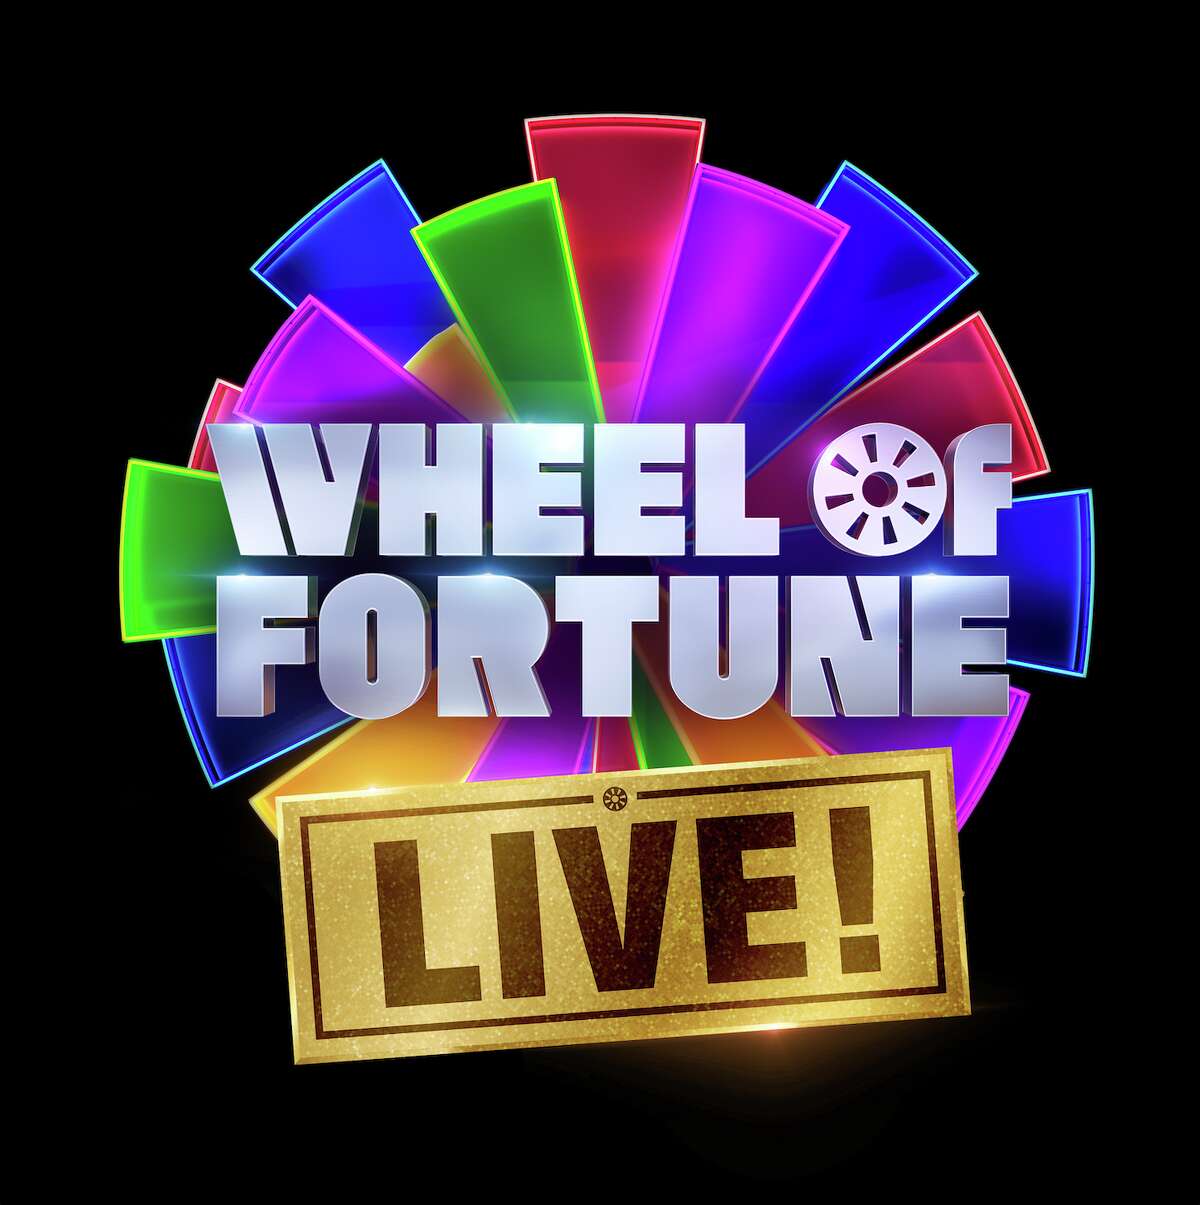 'Wheel of Fortune LIVE!" coming to San Antonio's Tobin Center in 2023